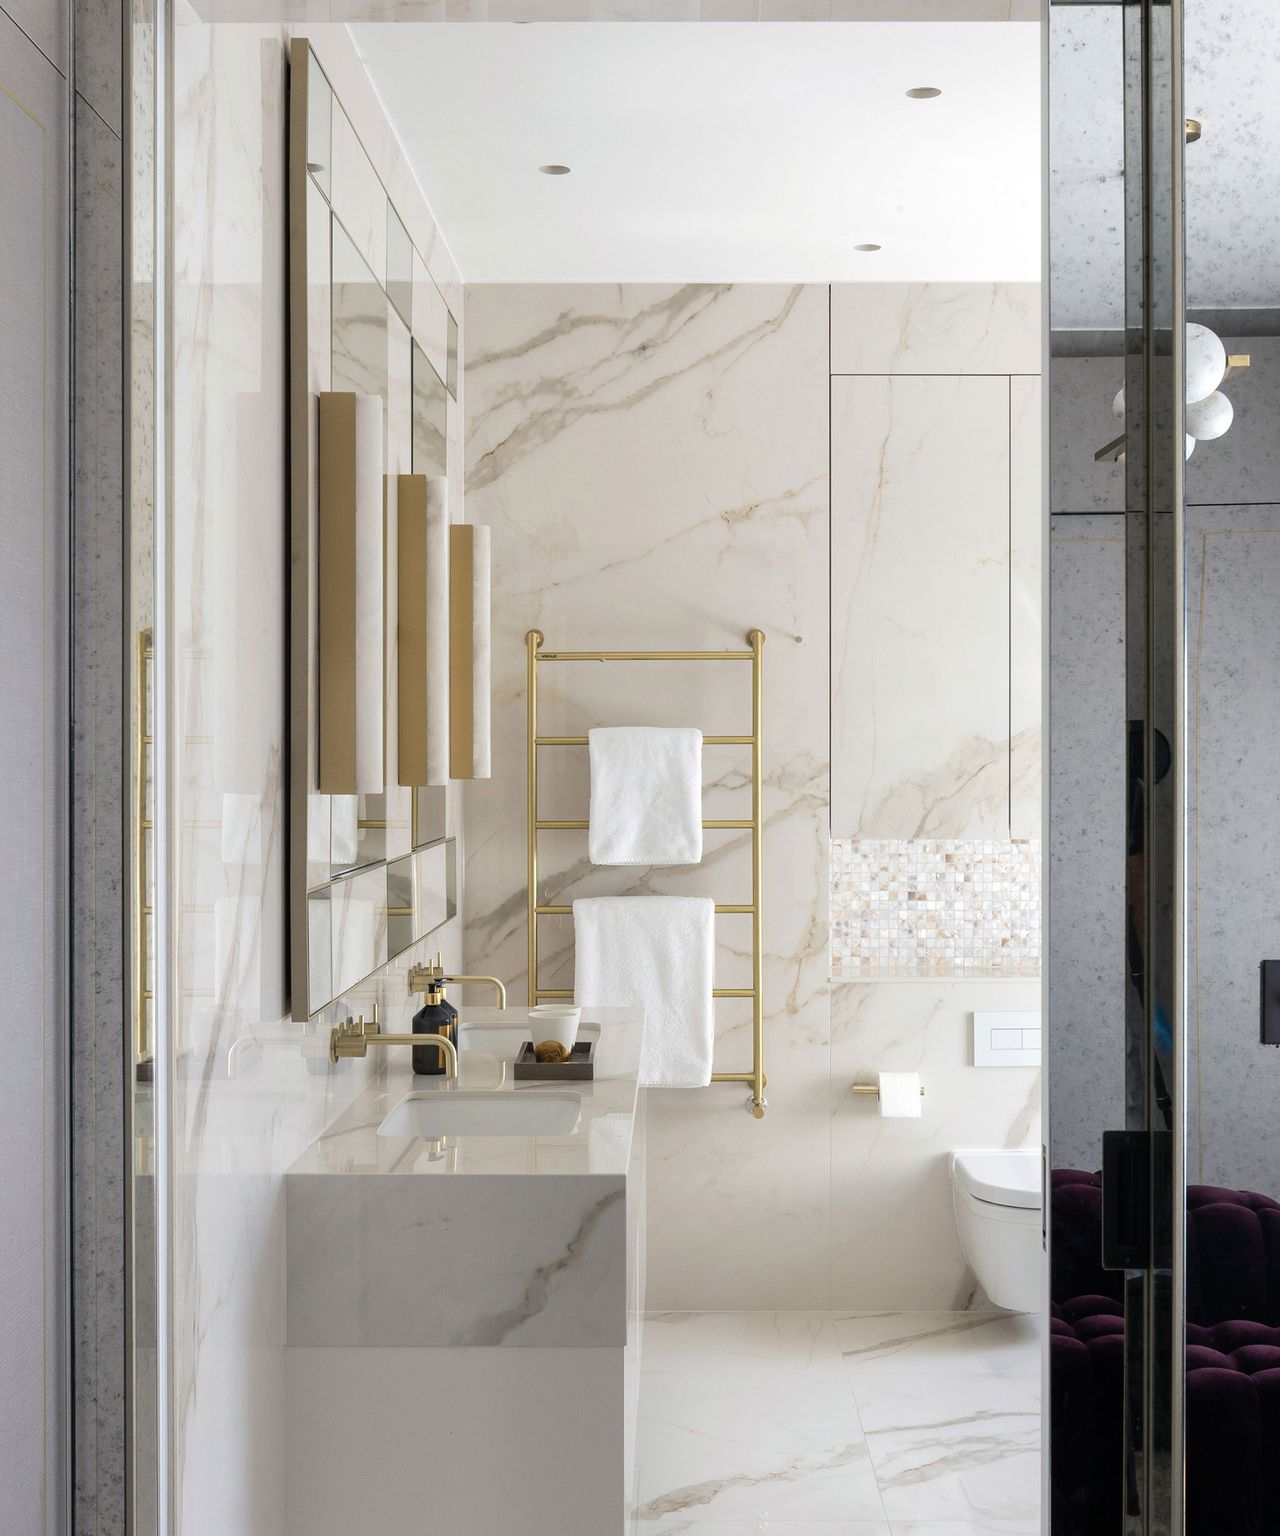 15 design tricks to make a small bathroom look bigger | Real Homes